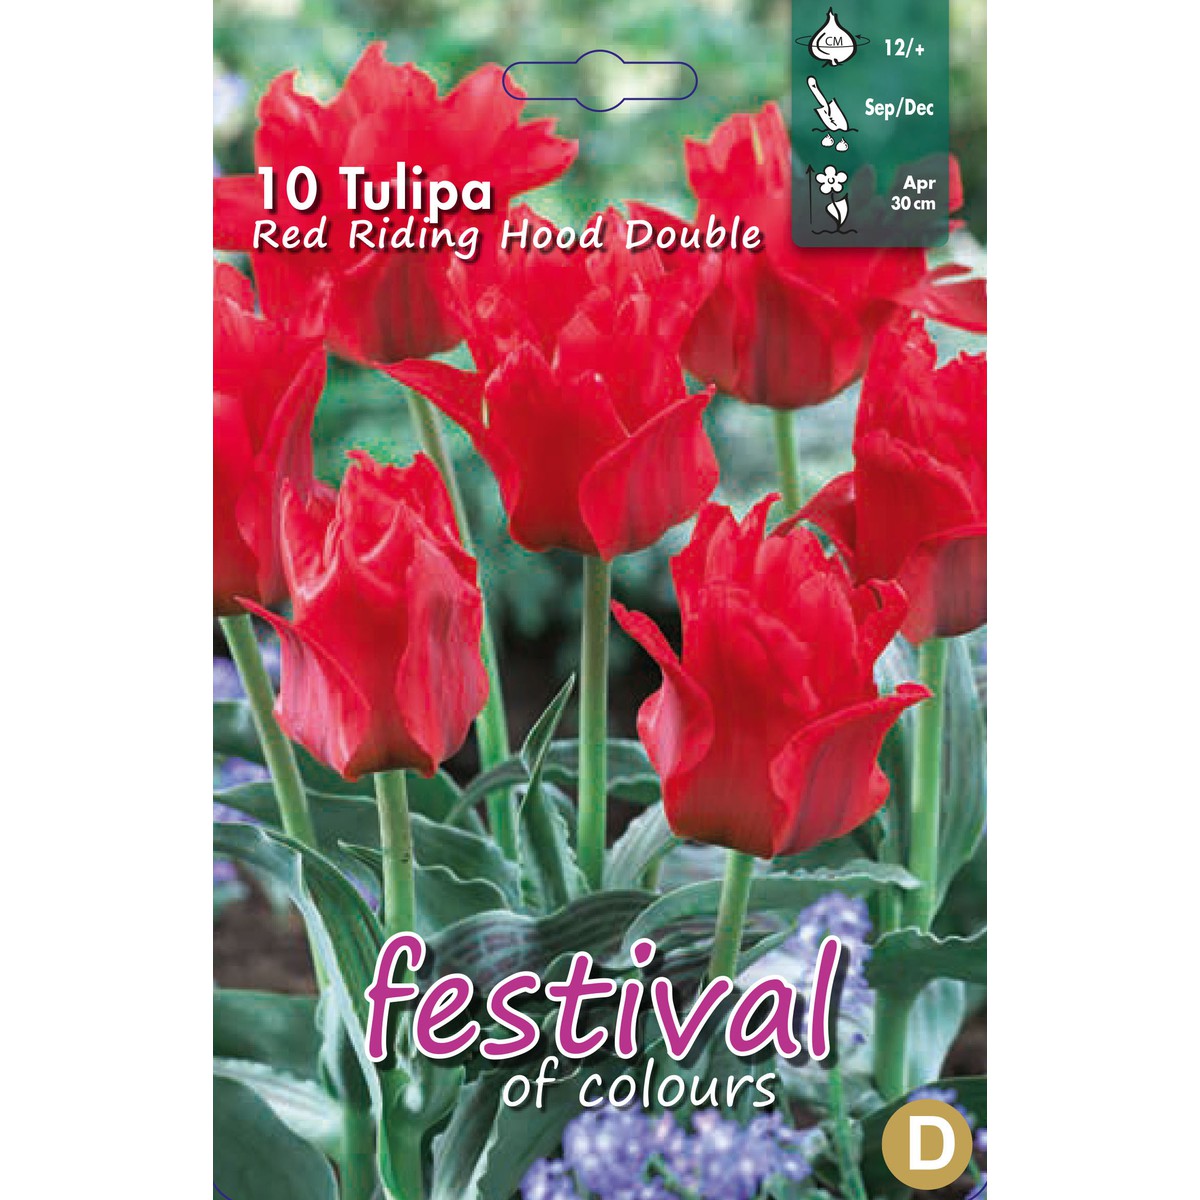   Tulipes greigii 'Red Riding Hood double'  10 pcs 12/+